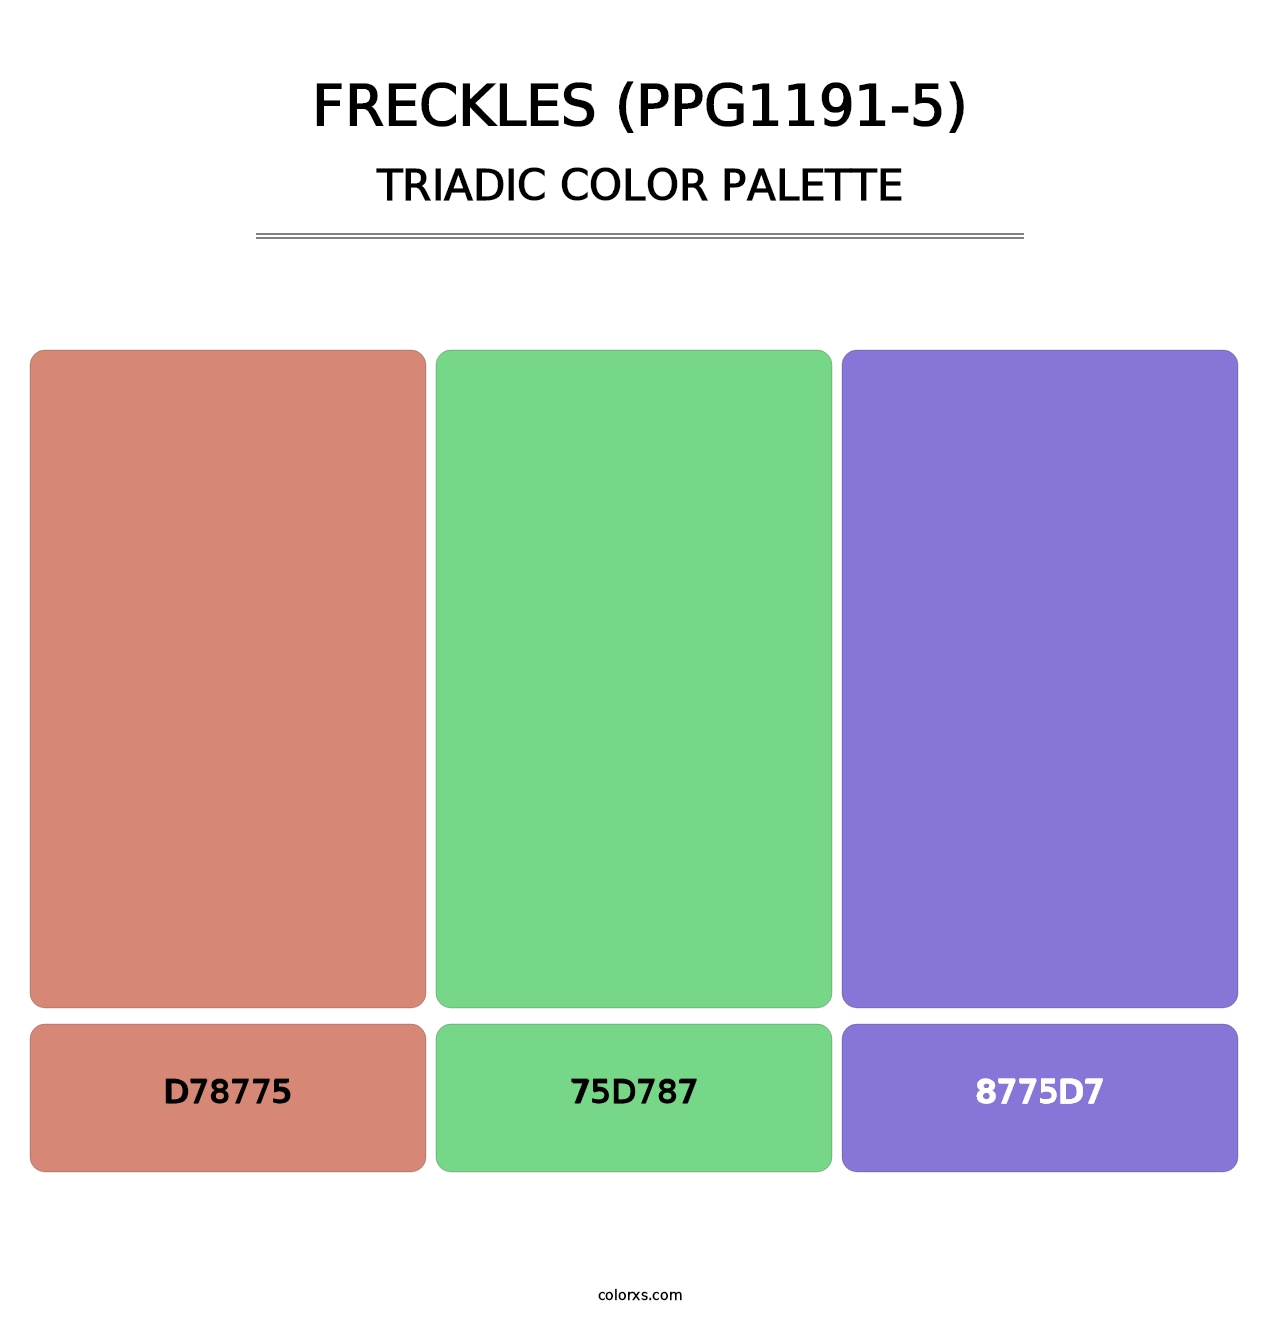 Freckles (PPG1191-5) - Triadic Color Palette